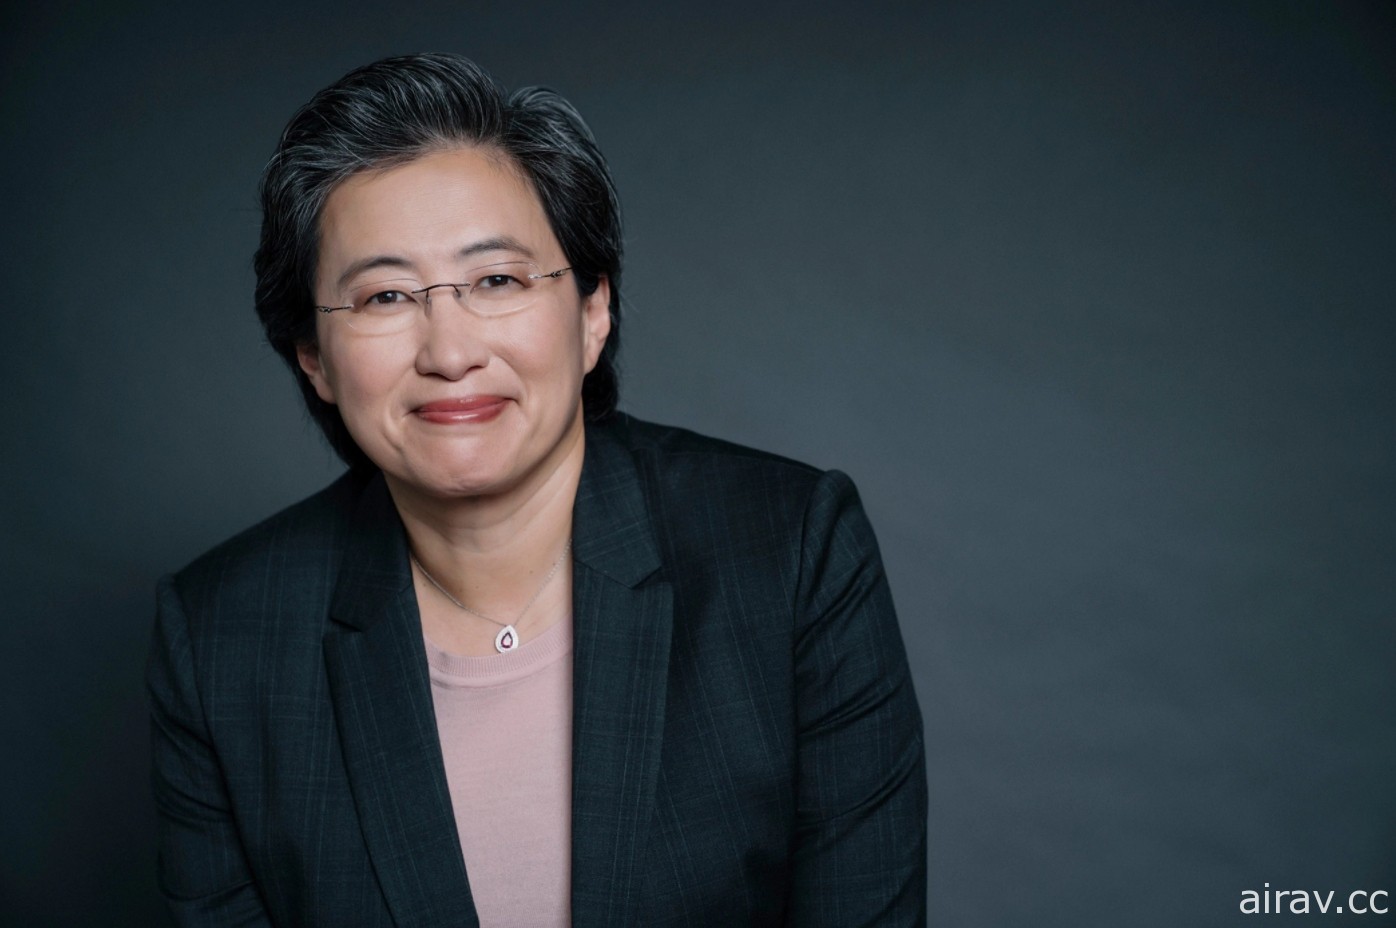 AMD 总裁苏姿丰将于 CES 2021 发表主题演讲 分享 AMD 在娱乐、游戏等领域的未来展望